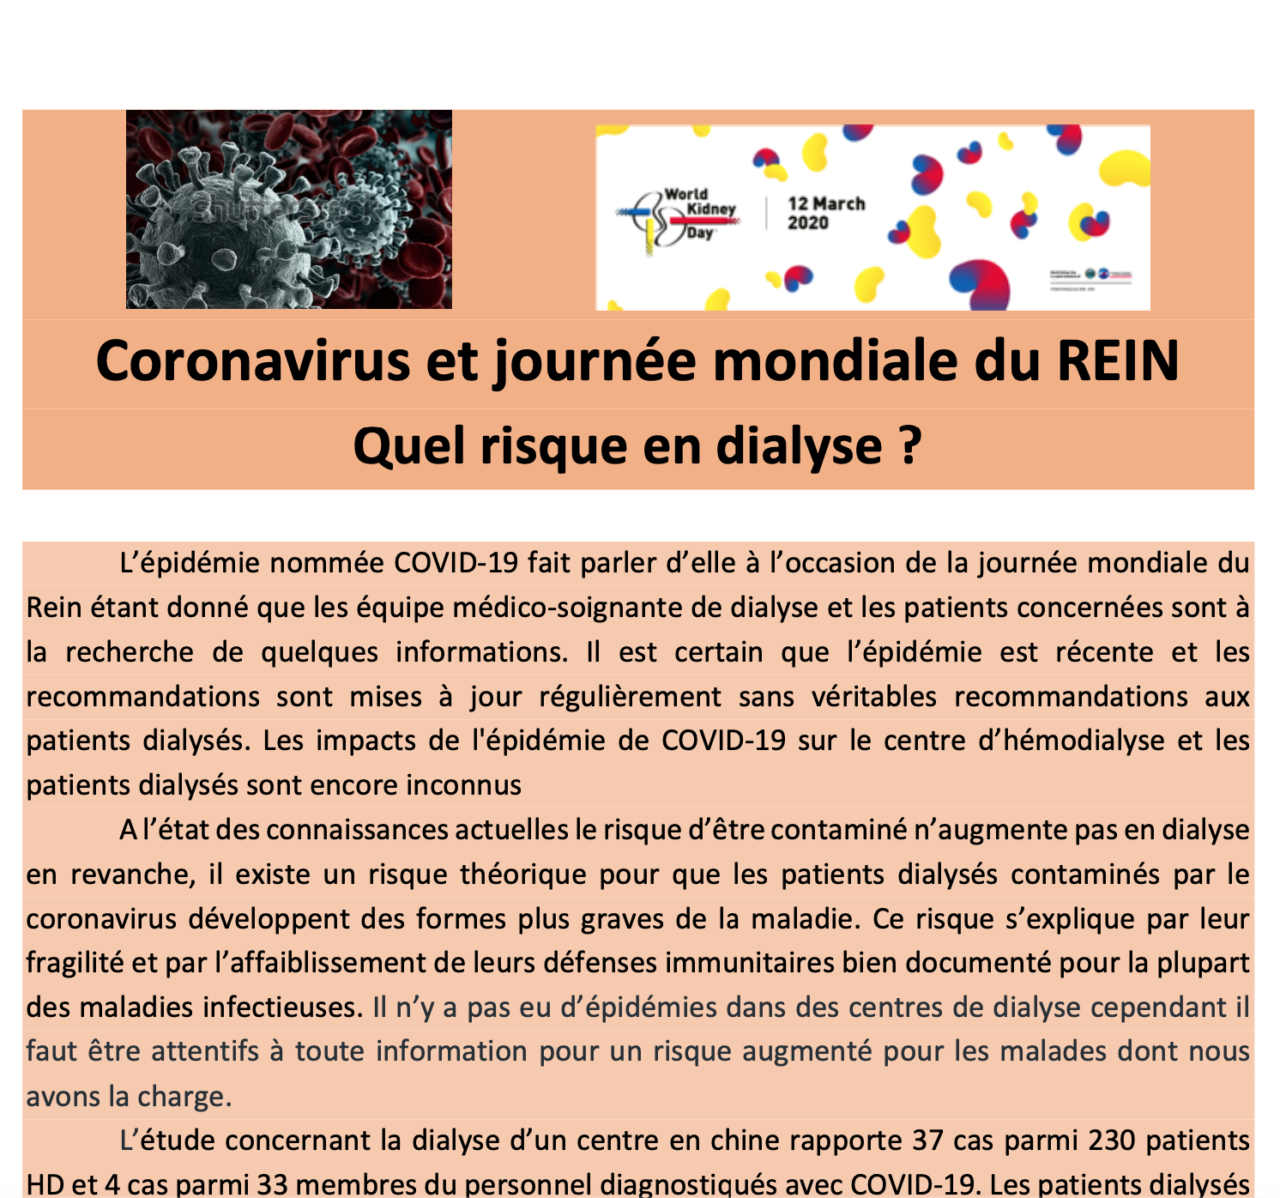 Coronavirus et journée mondiale du REIN